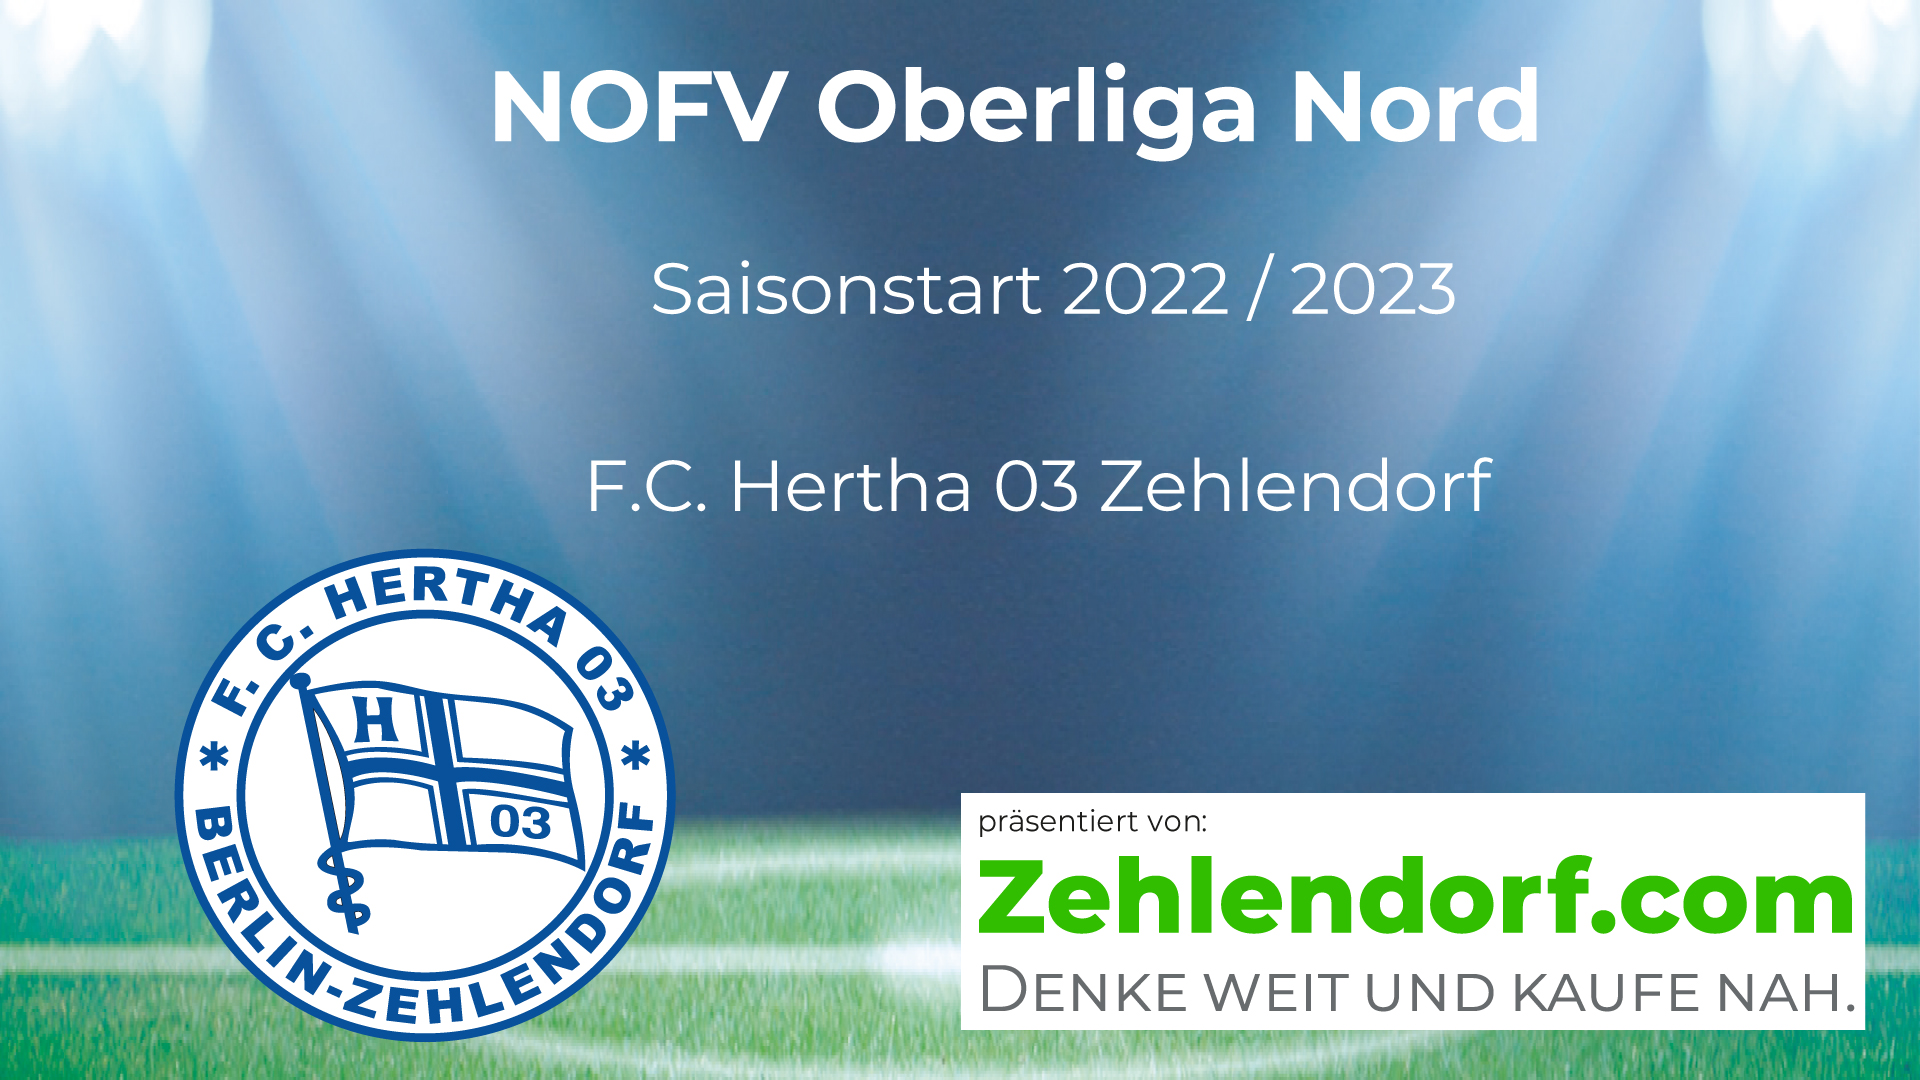 H03 NOFL Oberliga Nord Saisonstart 2022 – 2023